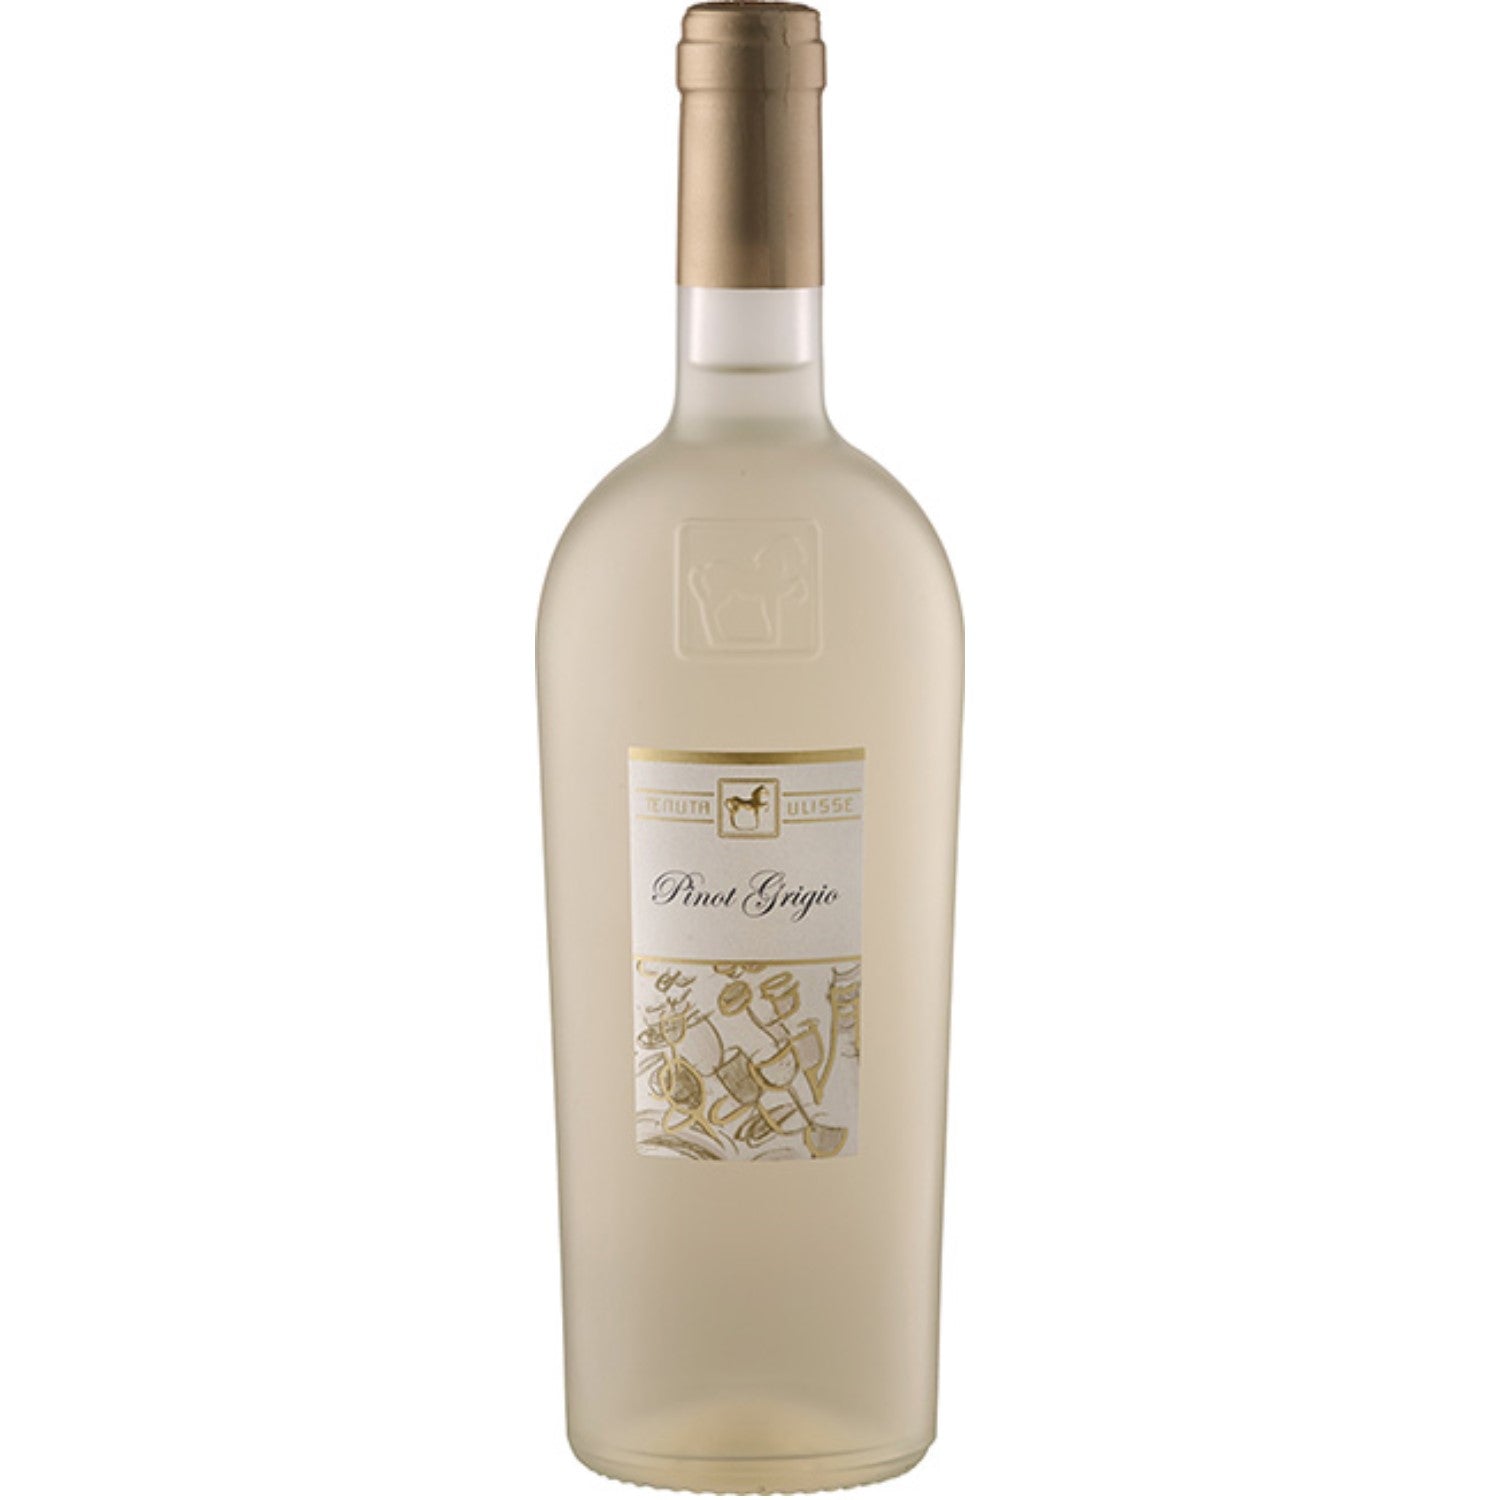 Tenuta Ulisse Selezione Pinot Grigio Weißwein Wein Trocken IGP Italien (12 x 0.75l) - Versanel -